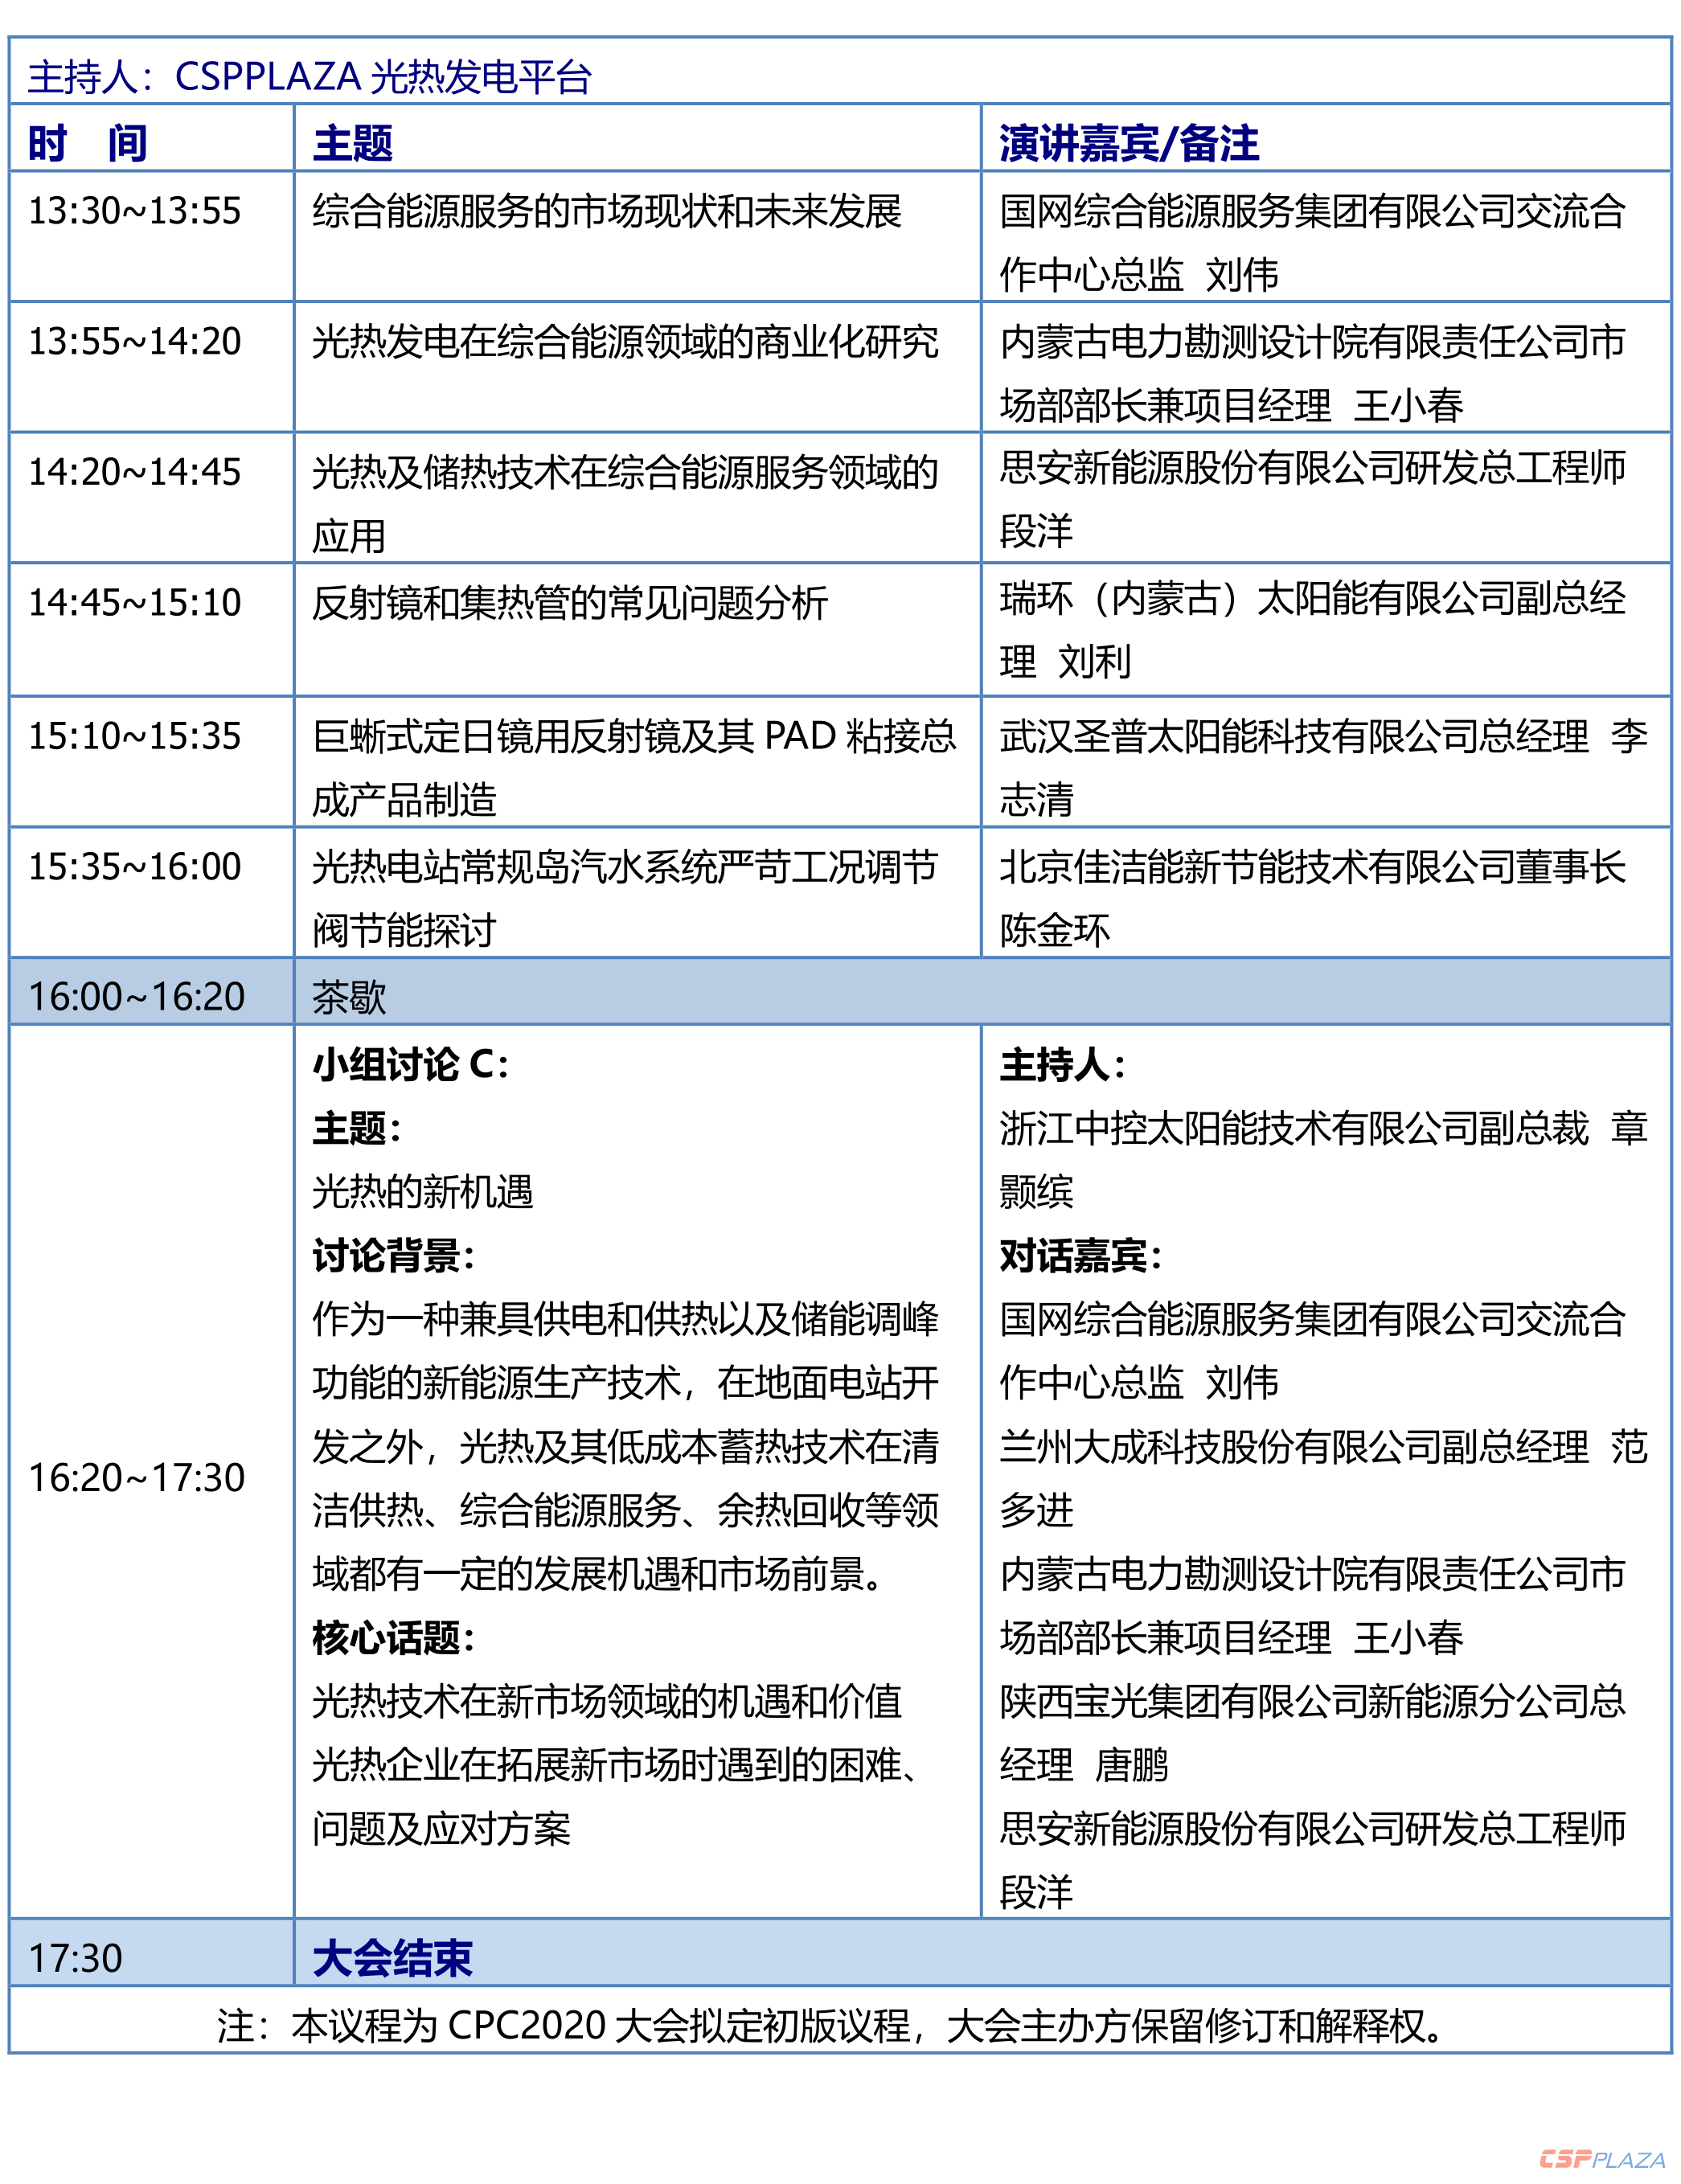 CPC2020中国国际光热大会议程-初版_5.png